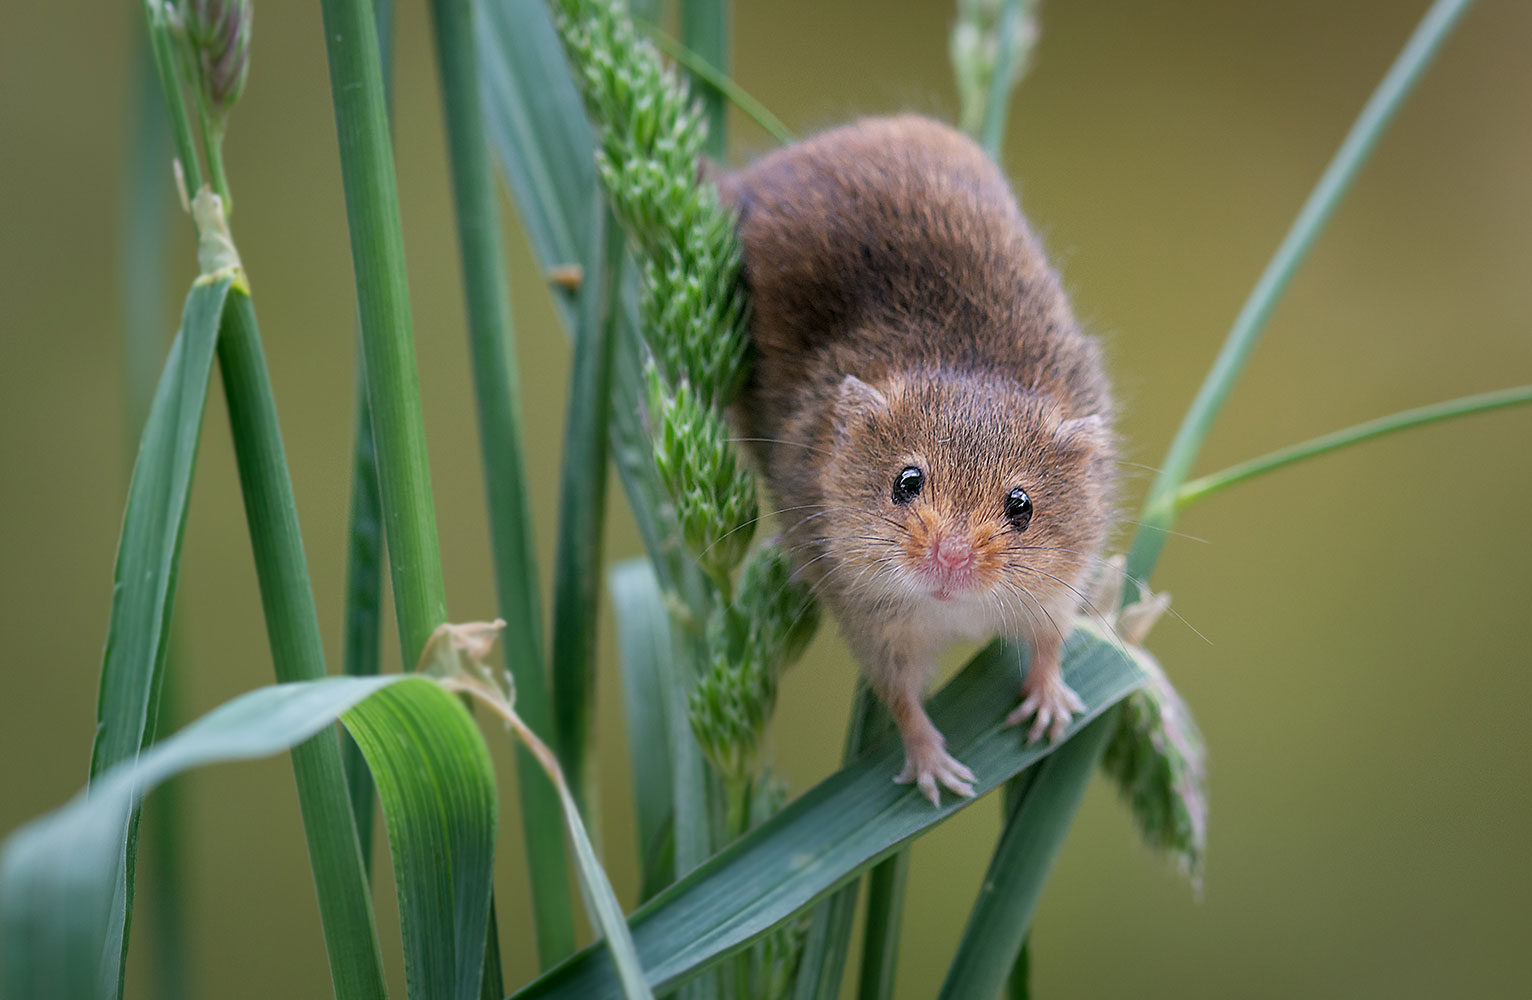 A tiny harvest mouse balances precariously on a blade of grass